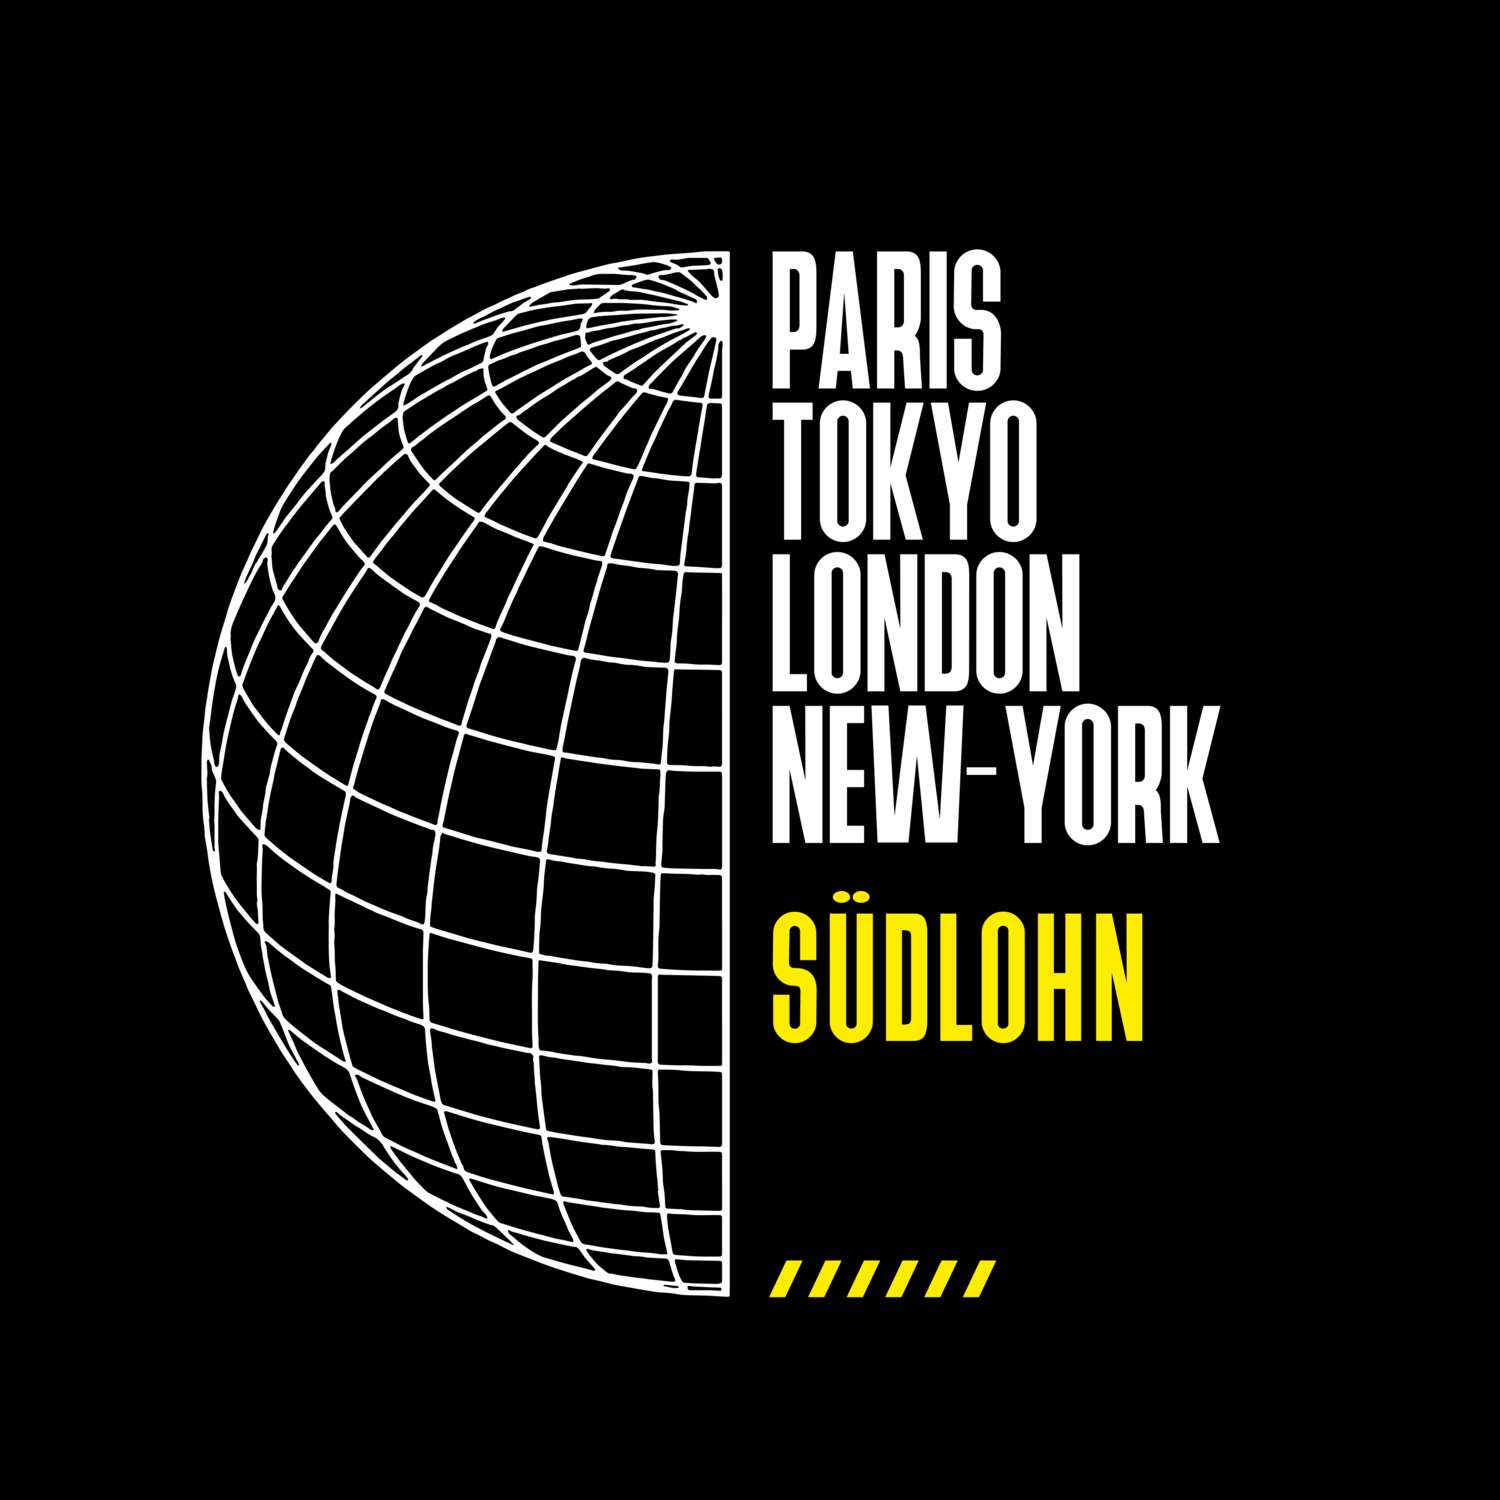 Südlohn T-Shirt »Paris Tokyo London«